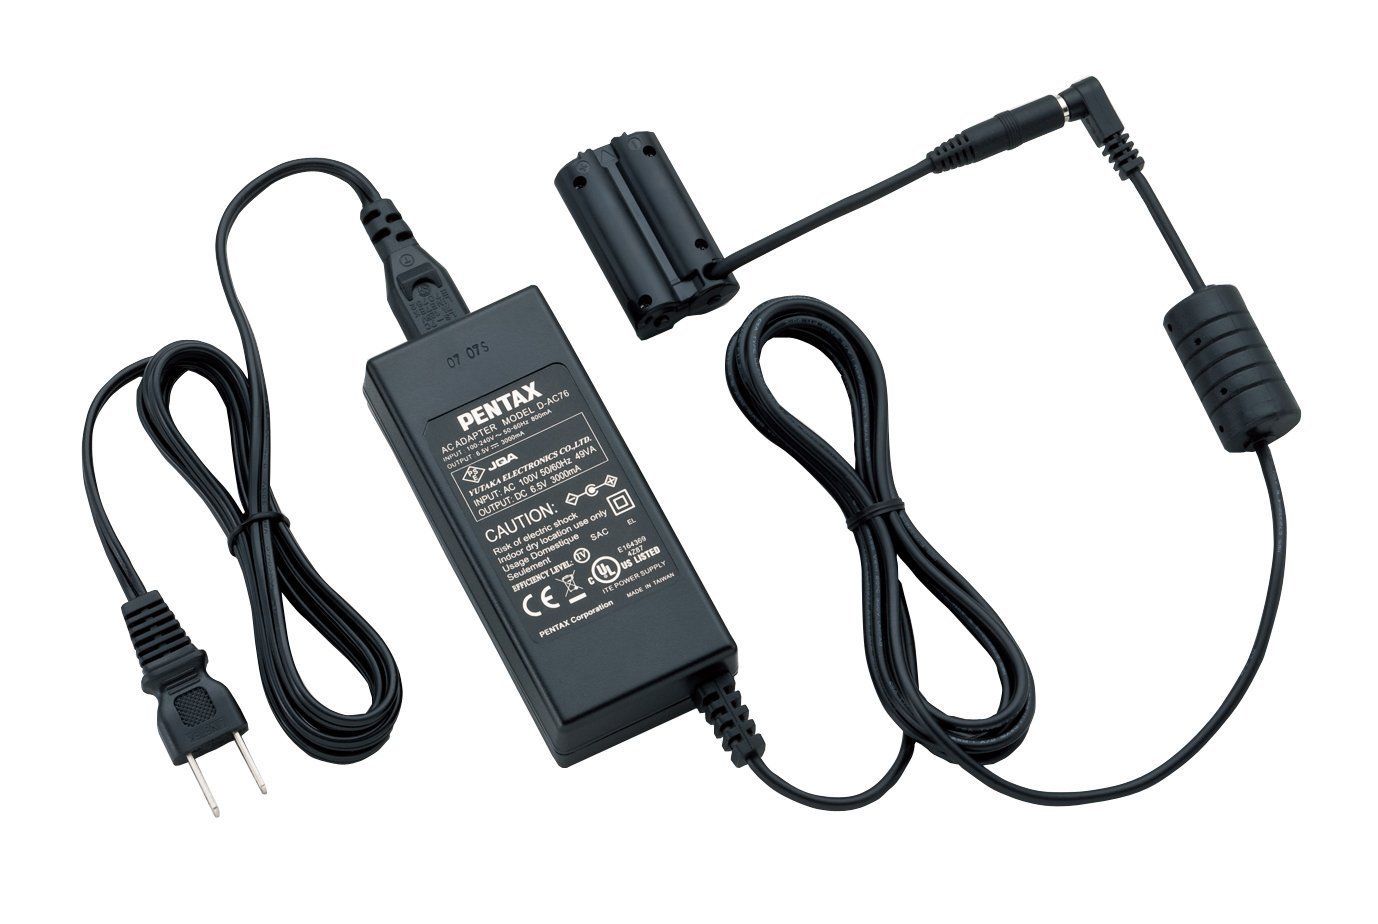 Pentax K-AC62J 39601 Optio AC Adapter Power Supply Cord Cable Charger Genuine Original